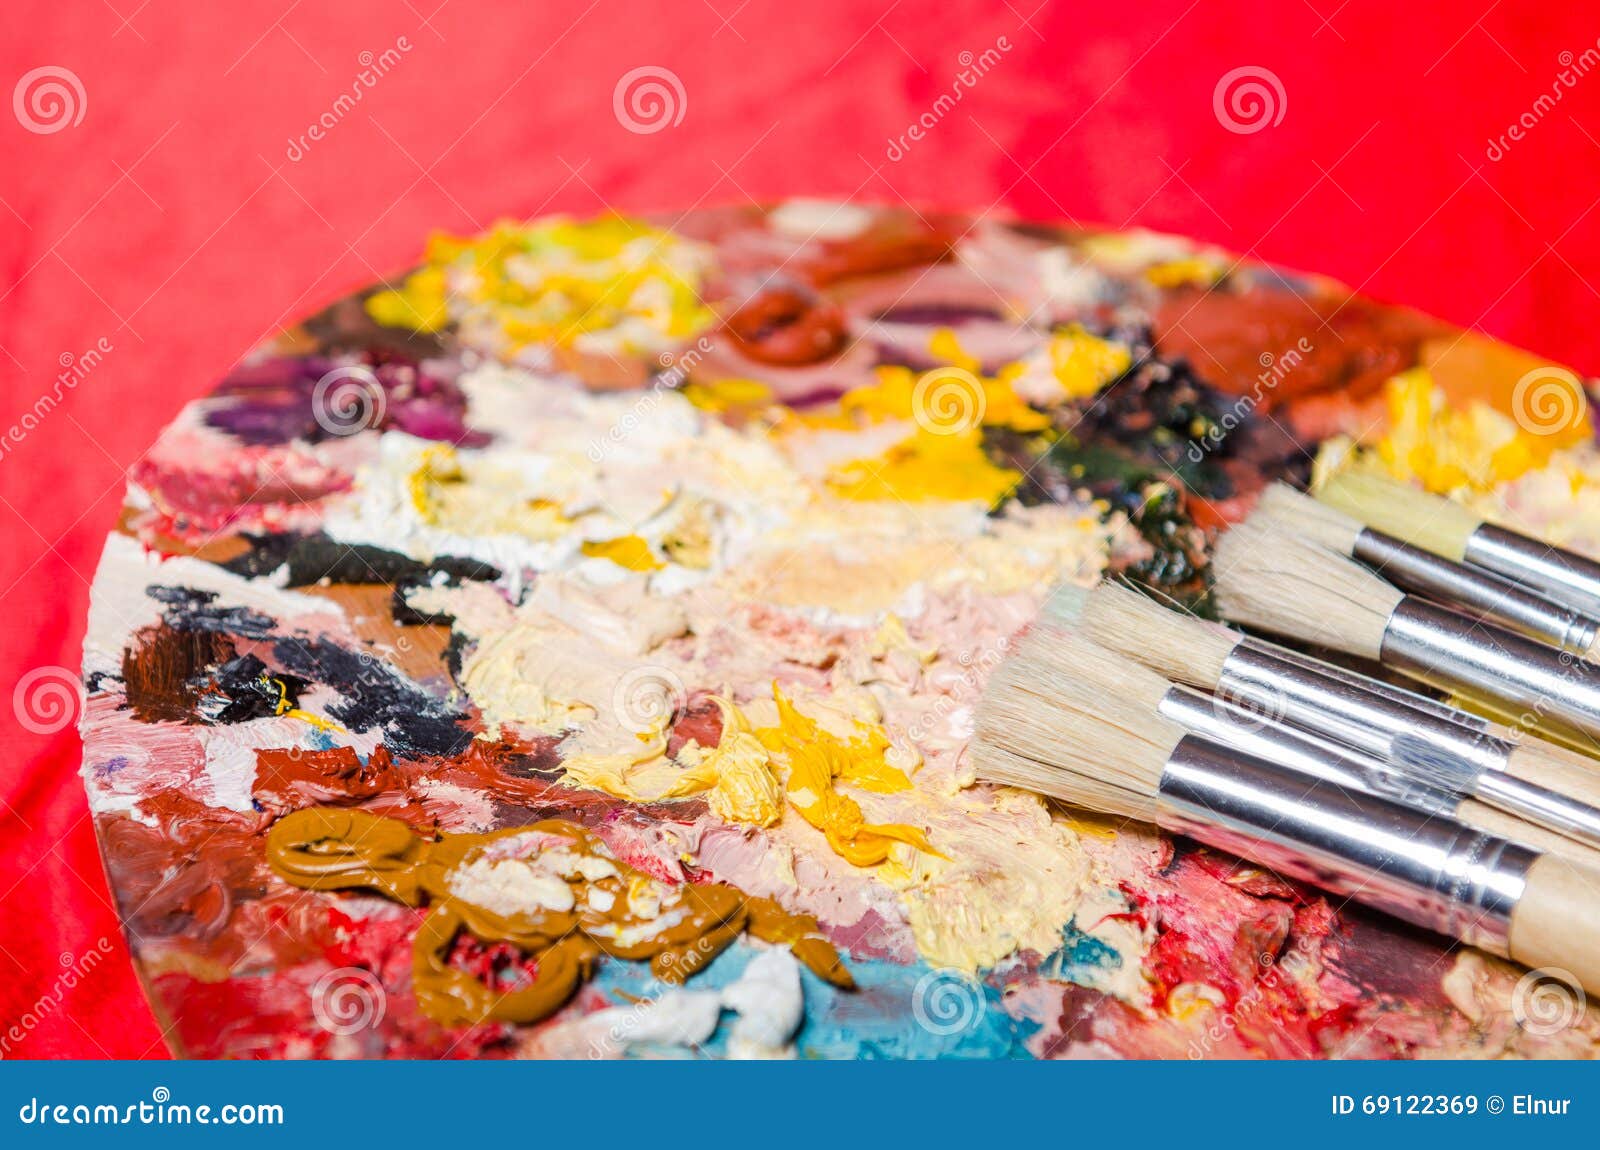 Artist palette in art concept, Stock image